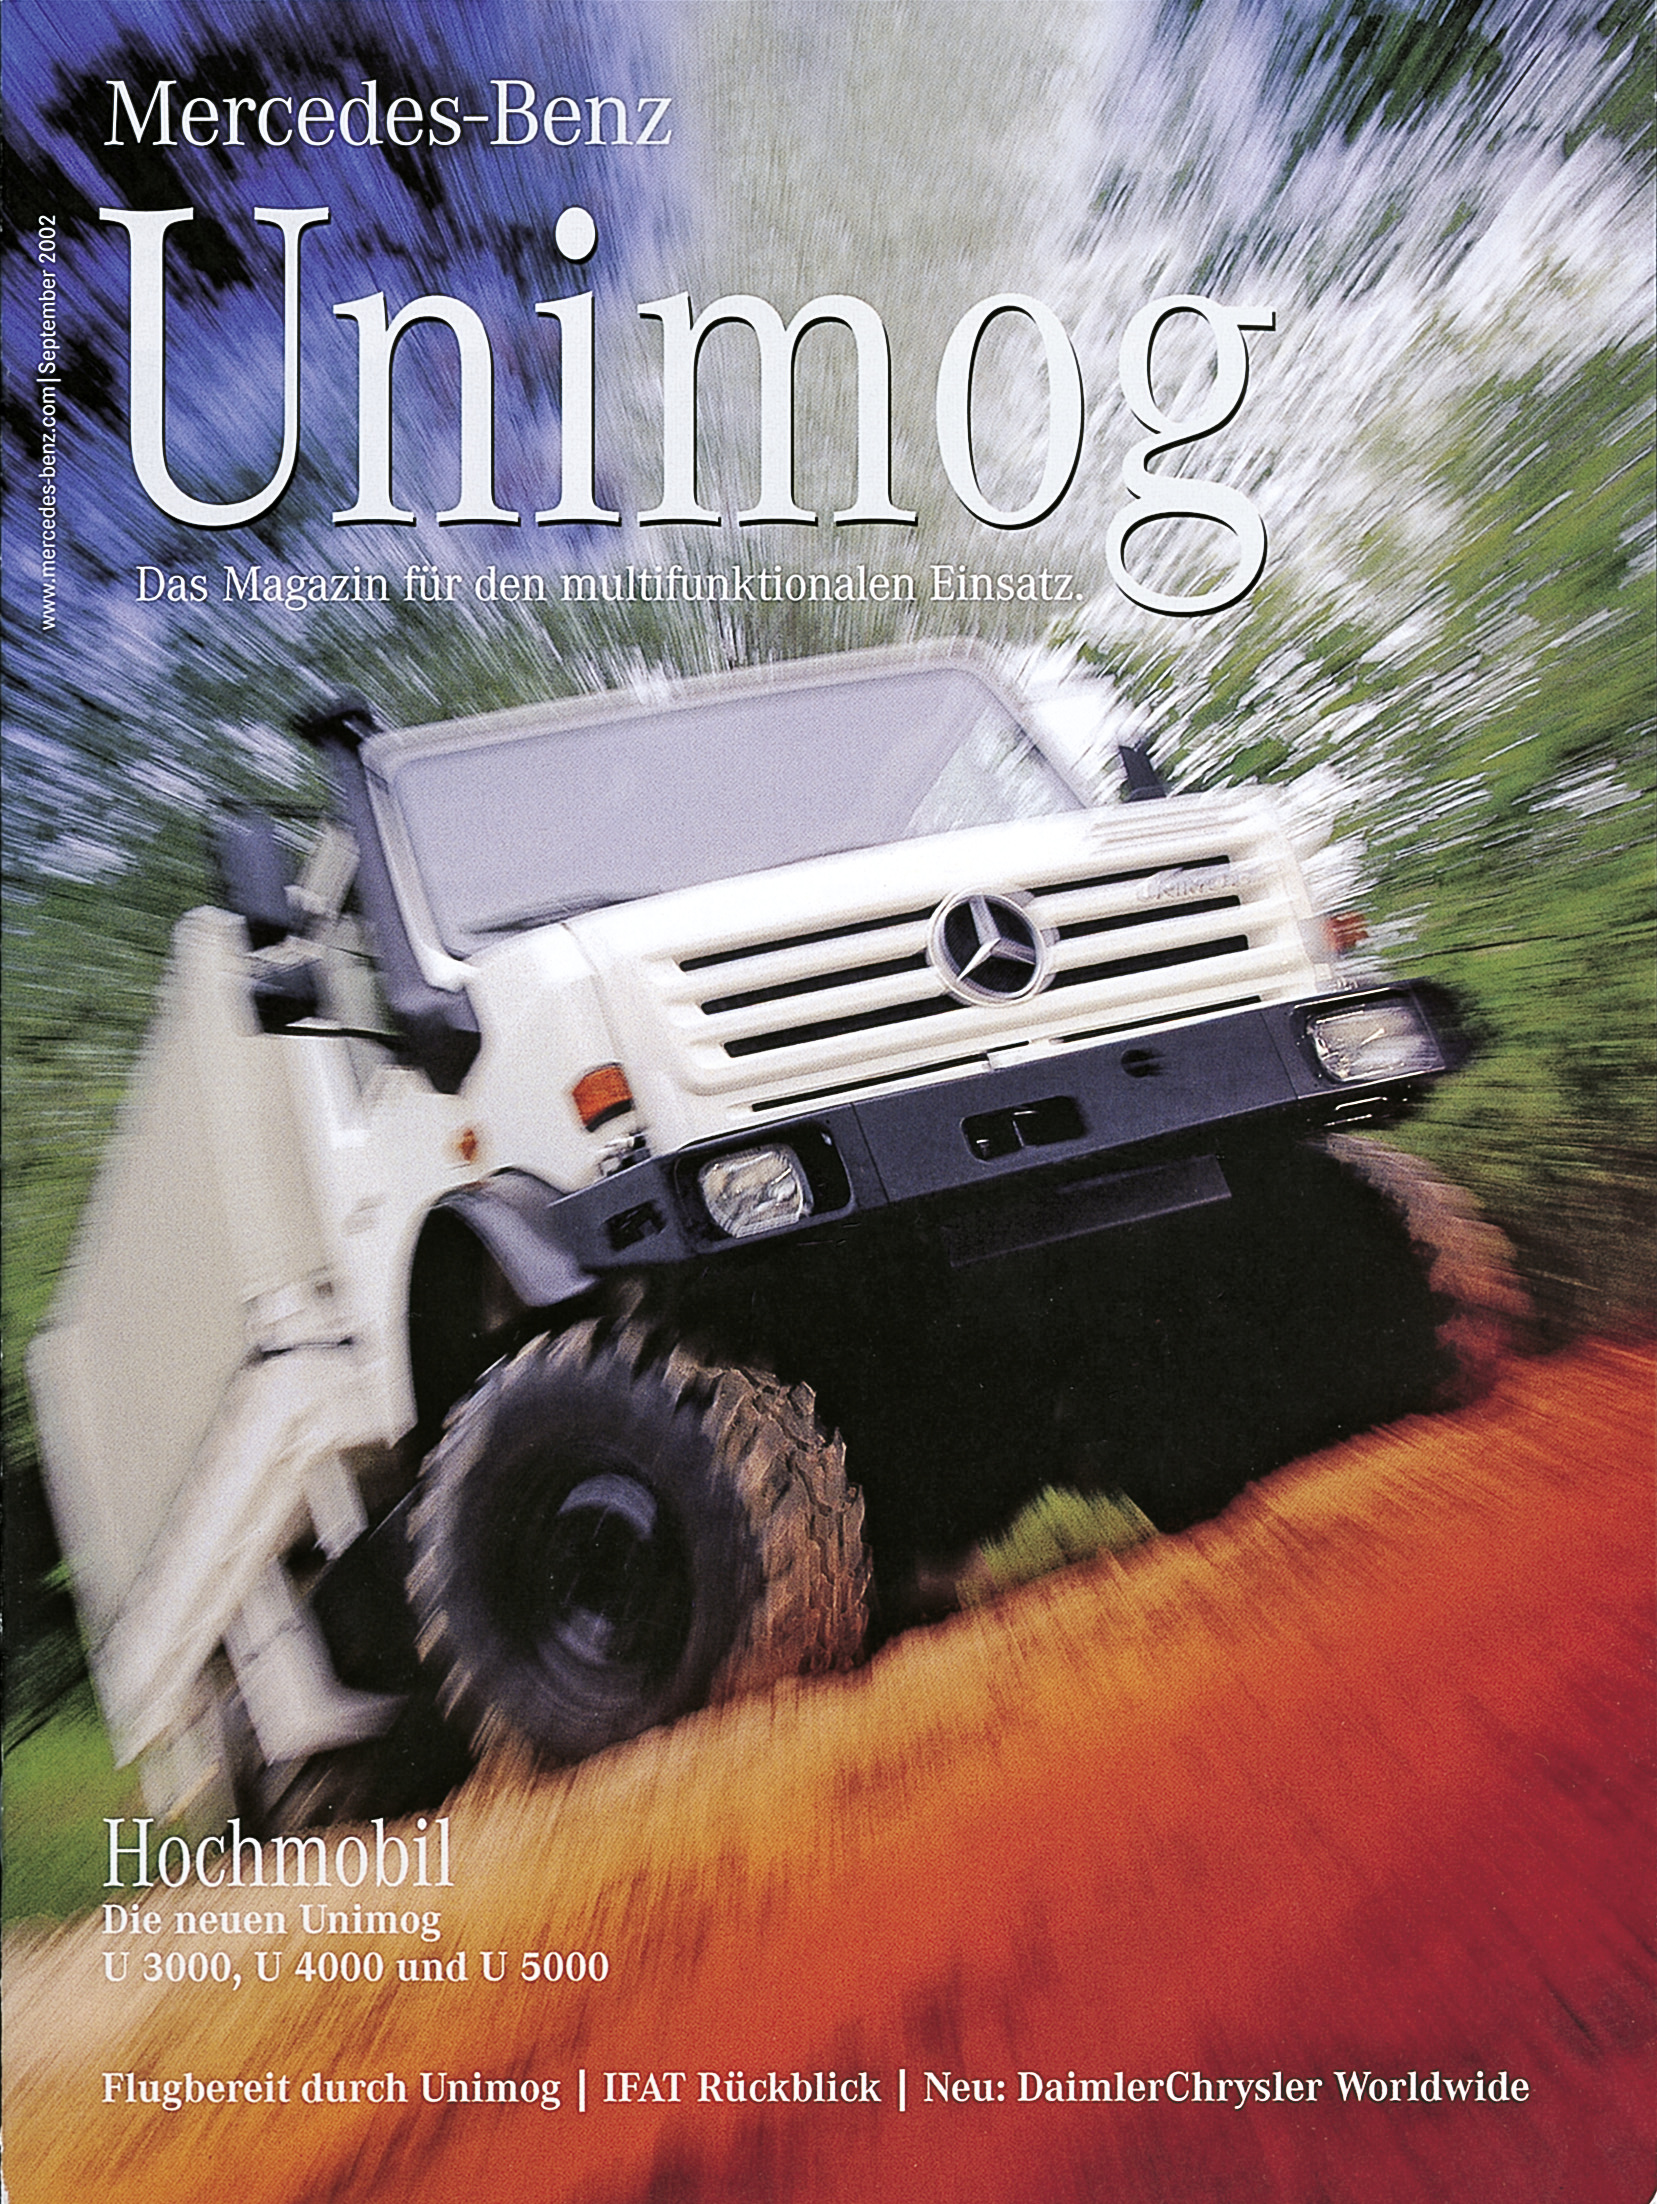 From the Unimog Guide to the Unimog Magazine: 65 years of the Unimog  Magazine